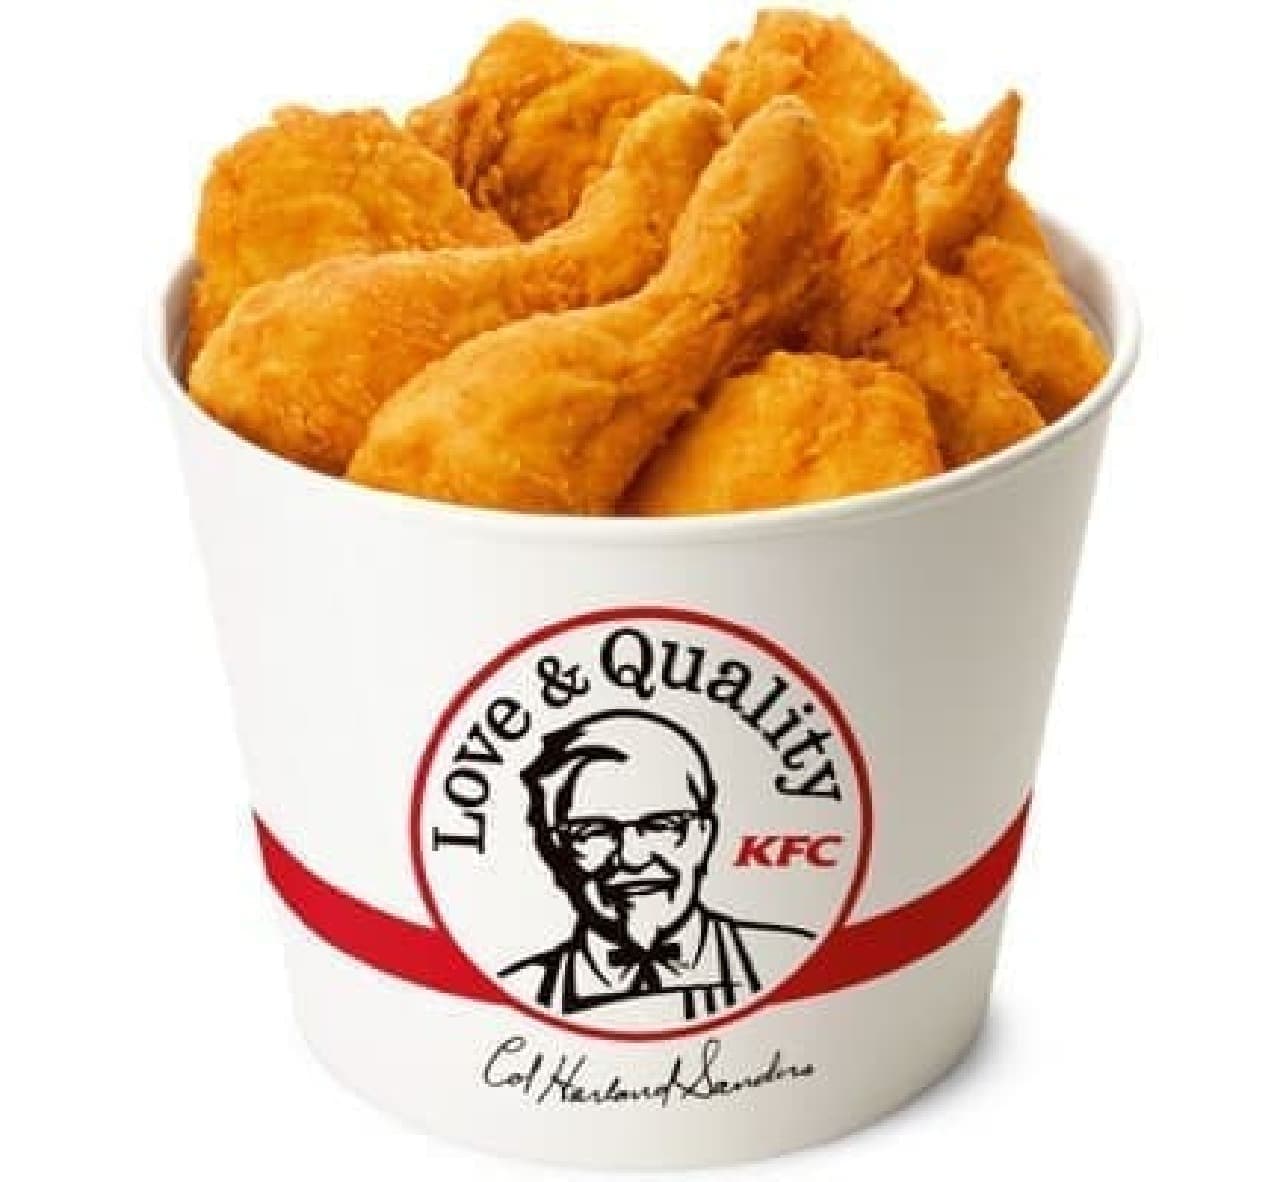 Speaking of Kentucky, chicken (image source: KFC official website)